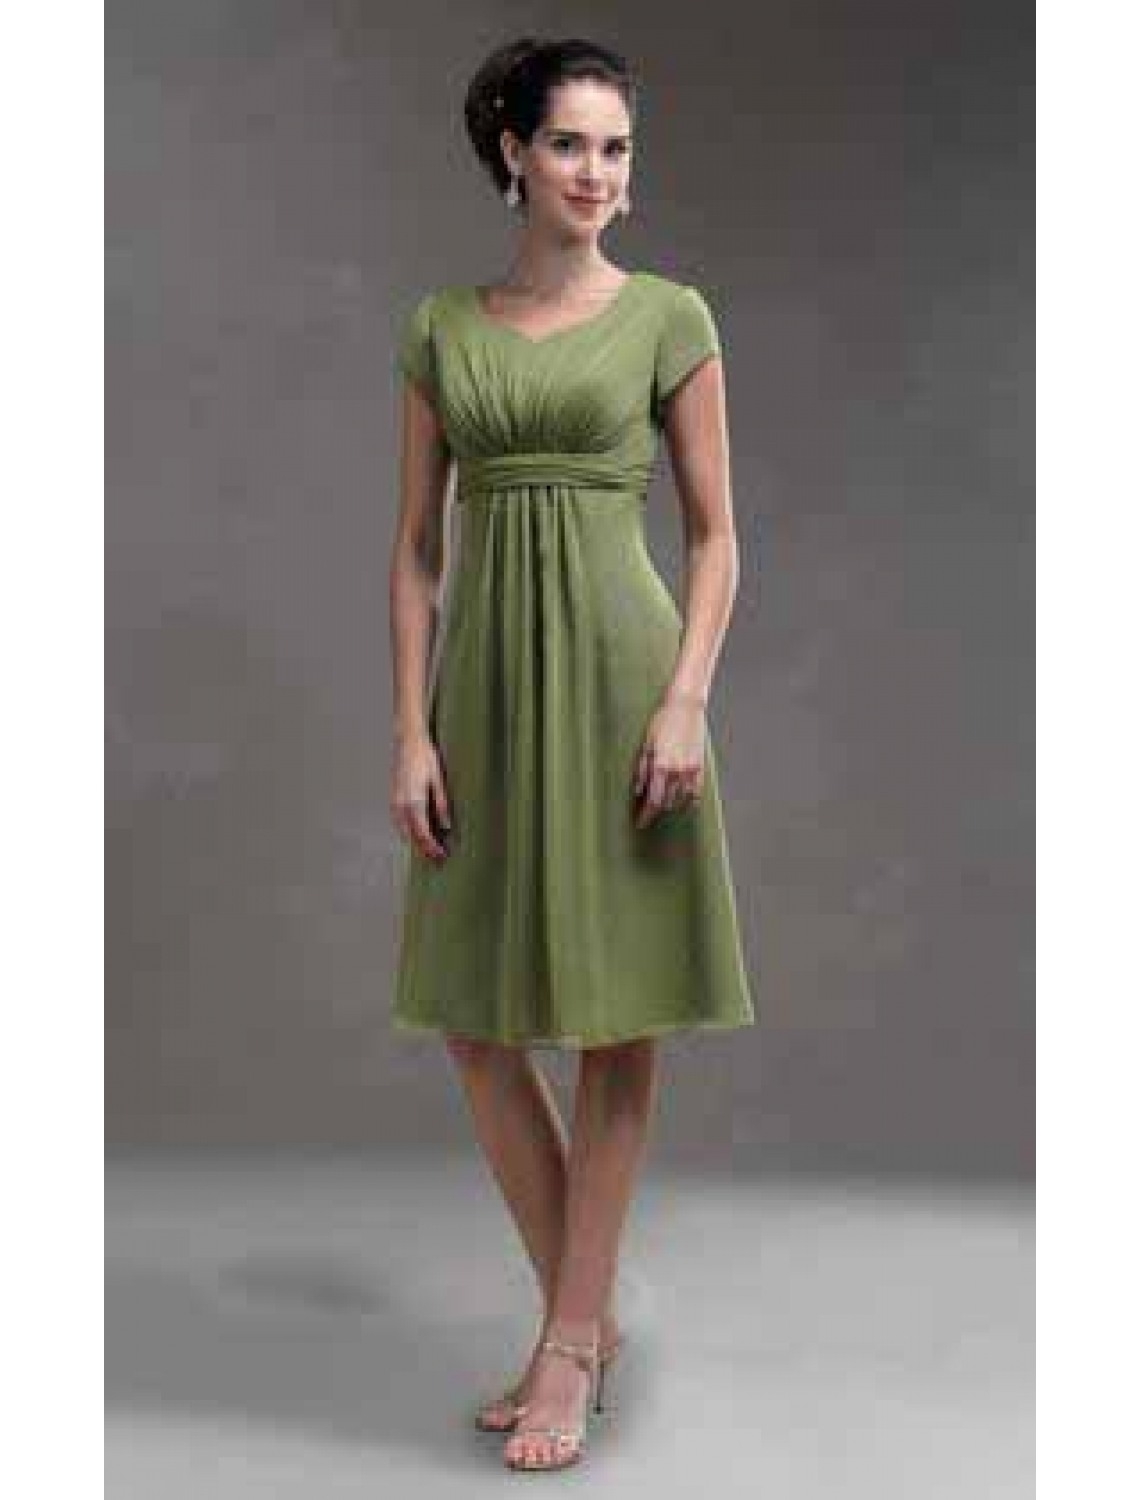 20 Perfekt Grünes Kurzes Kleid Galerie20 Erstaunlich Grünes Kurzes Kleid Spezialgebiet